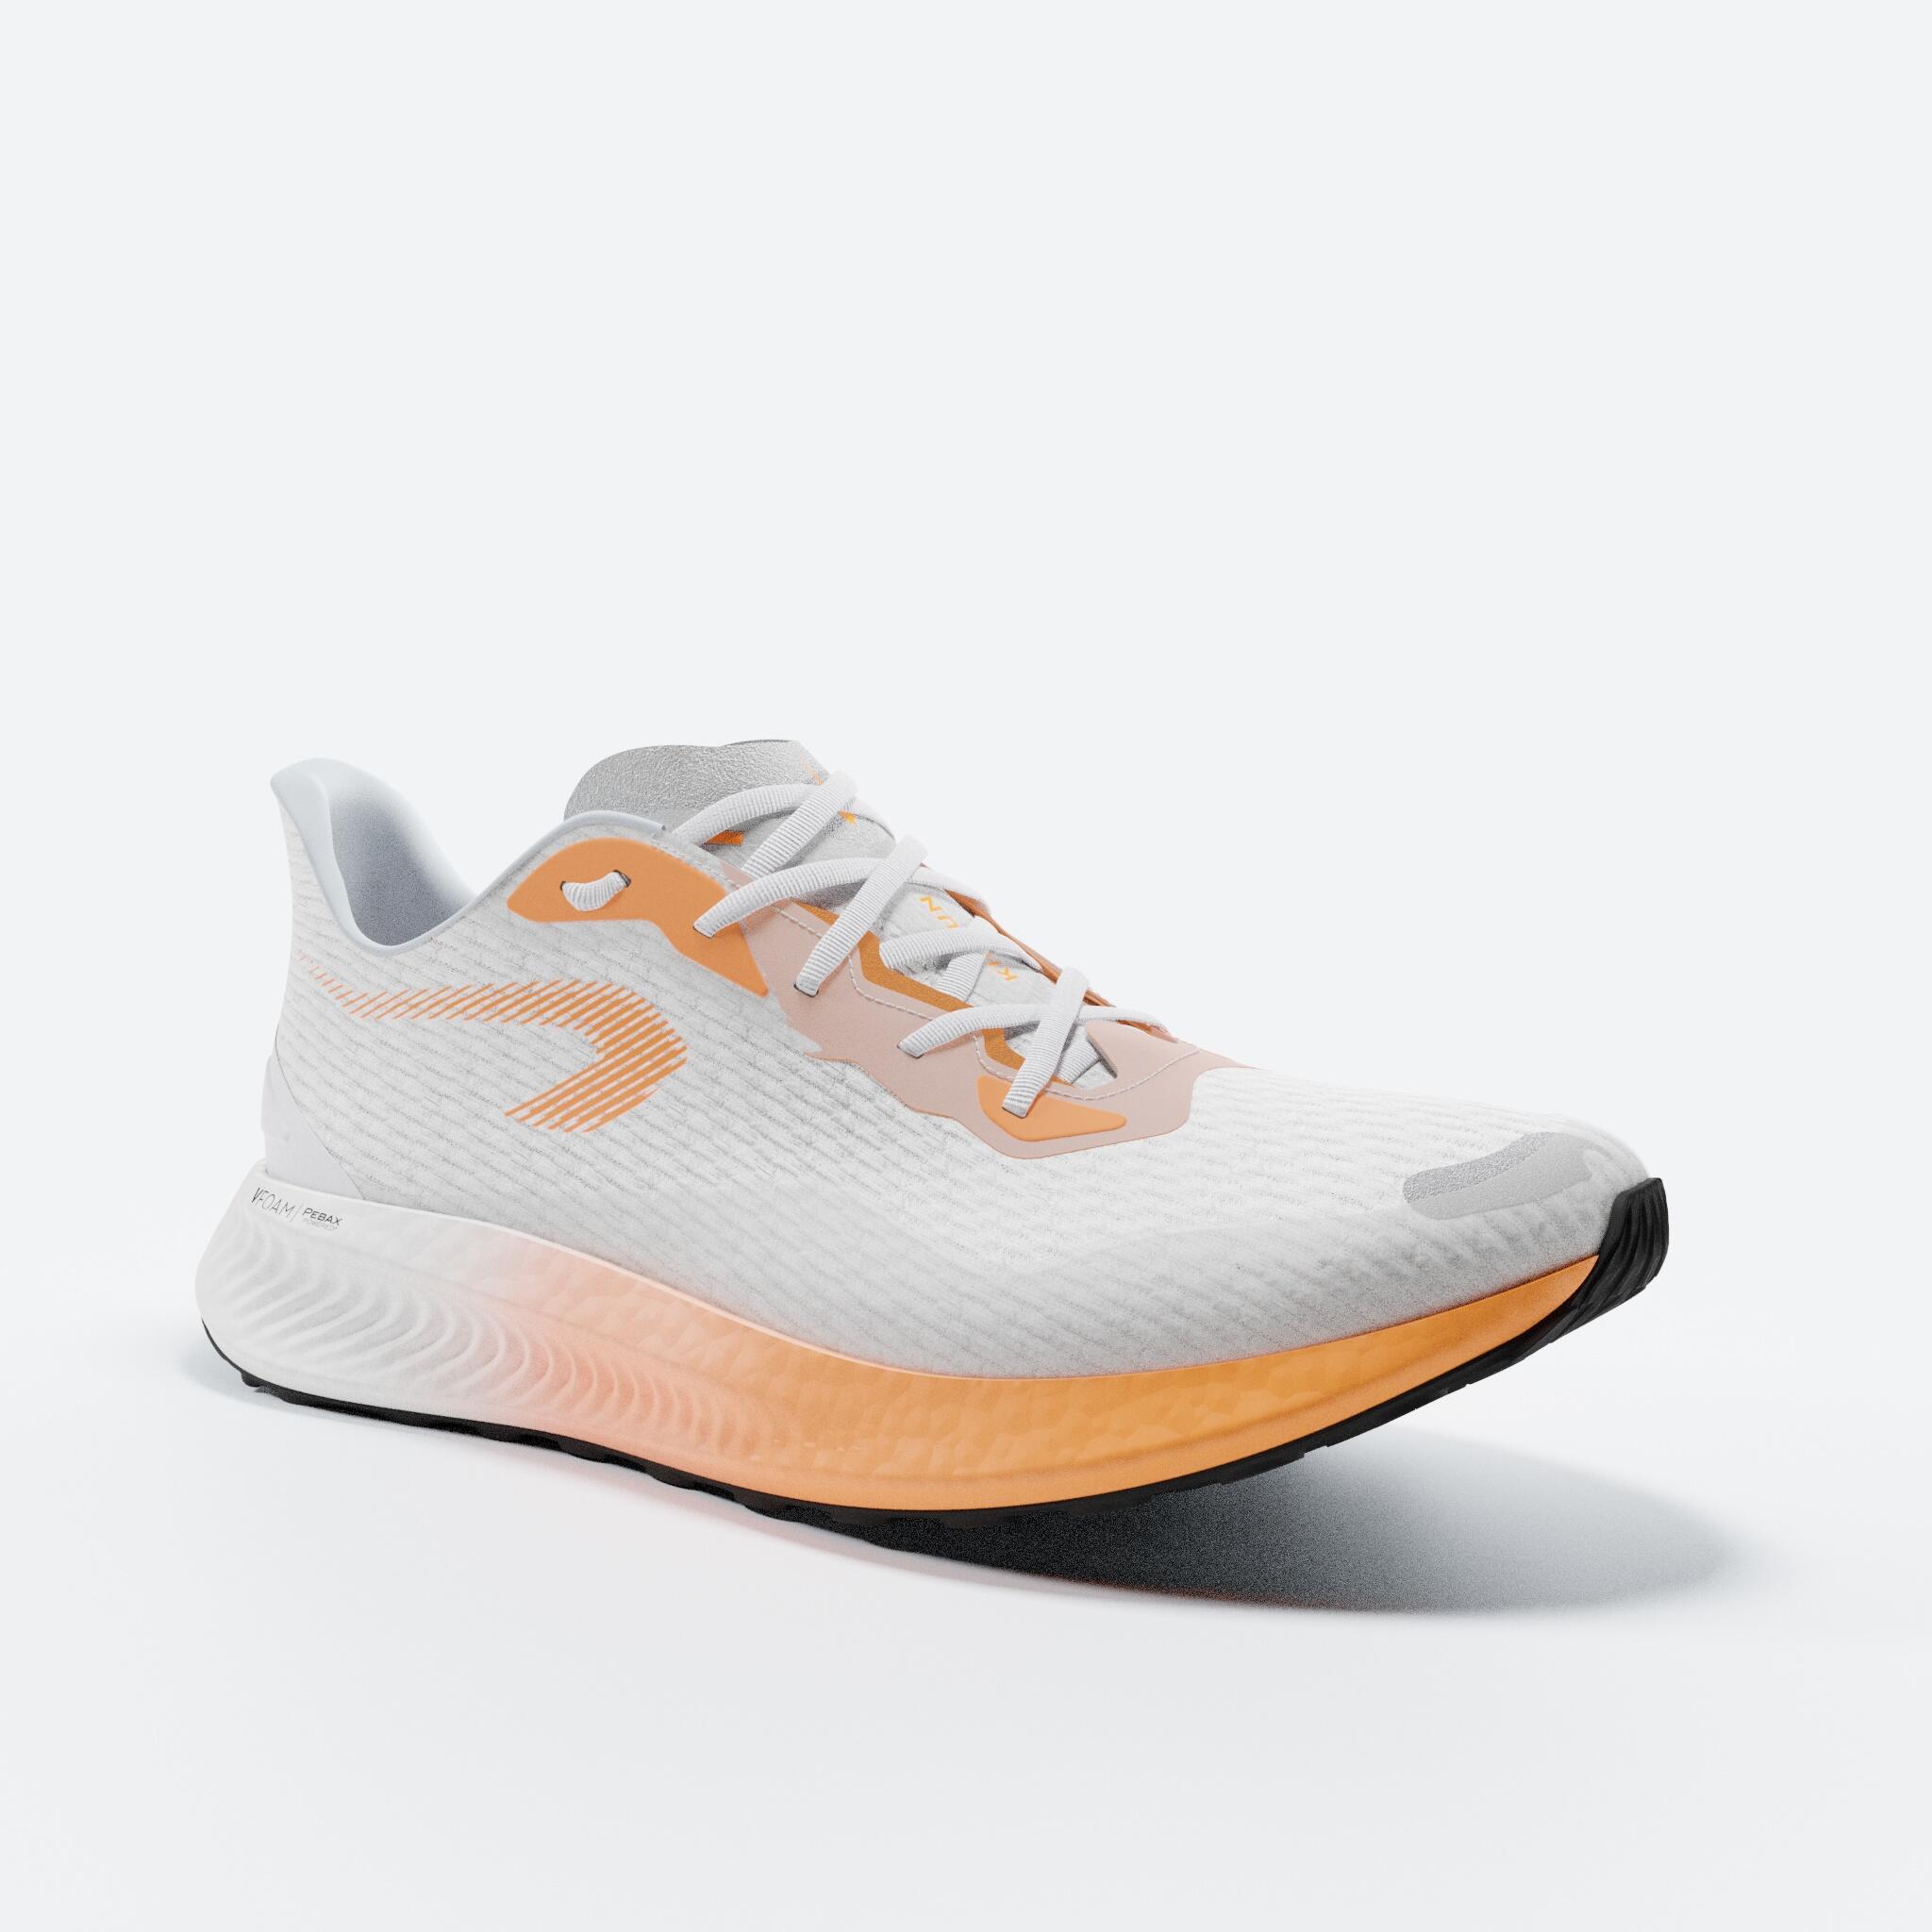 Men's Running Shoes - KD 500 3 - Snow white, Fluo pale mango